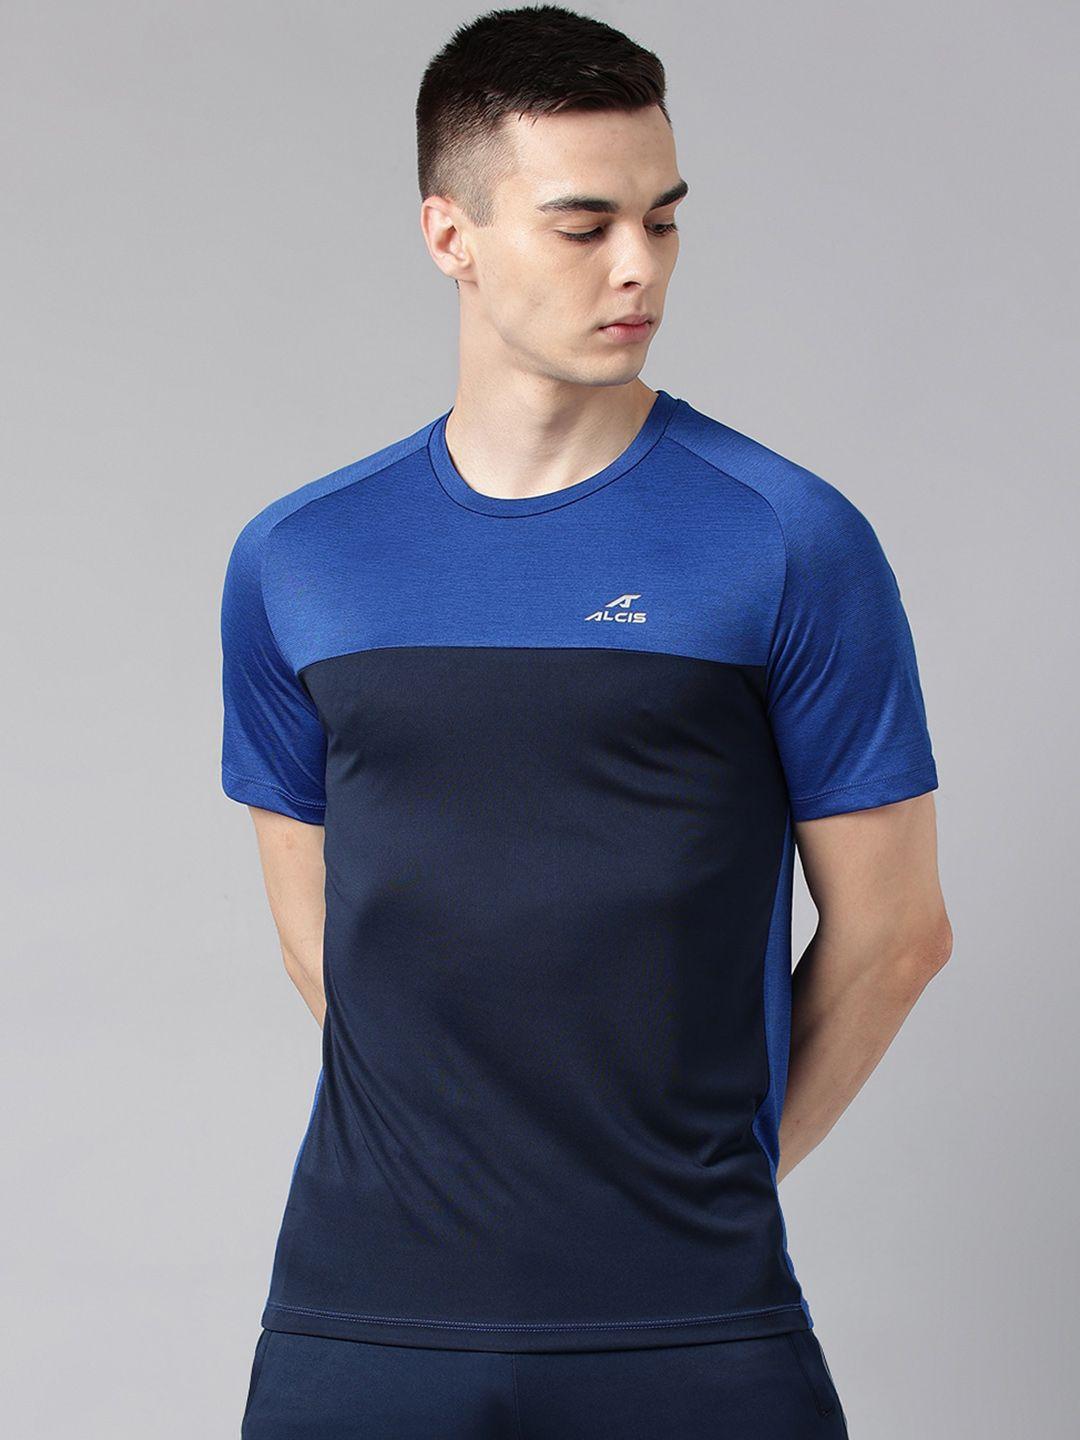 alcis colourblocked anti-static dry tech slim fit sports t-shirt